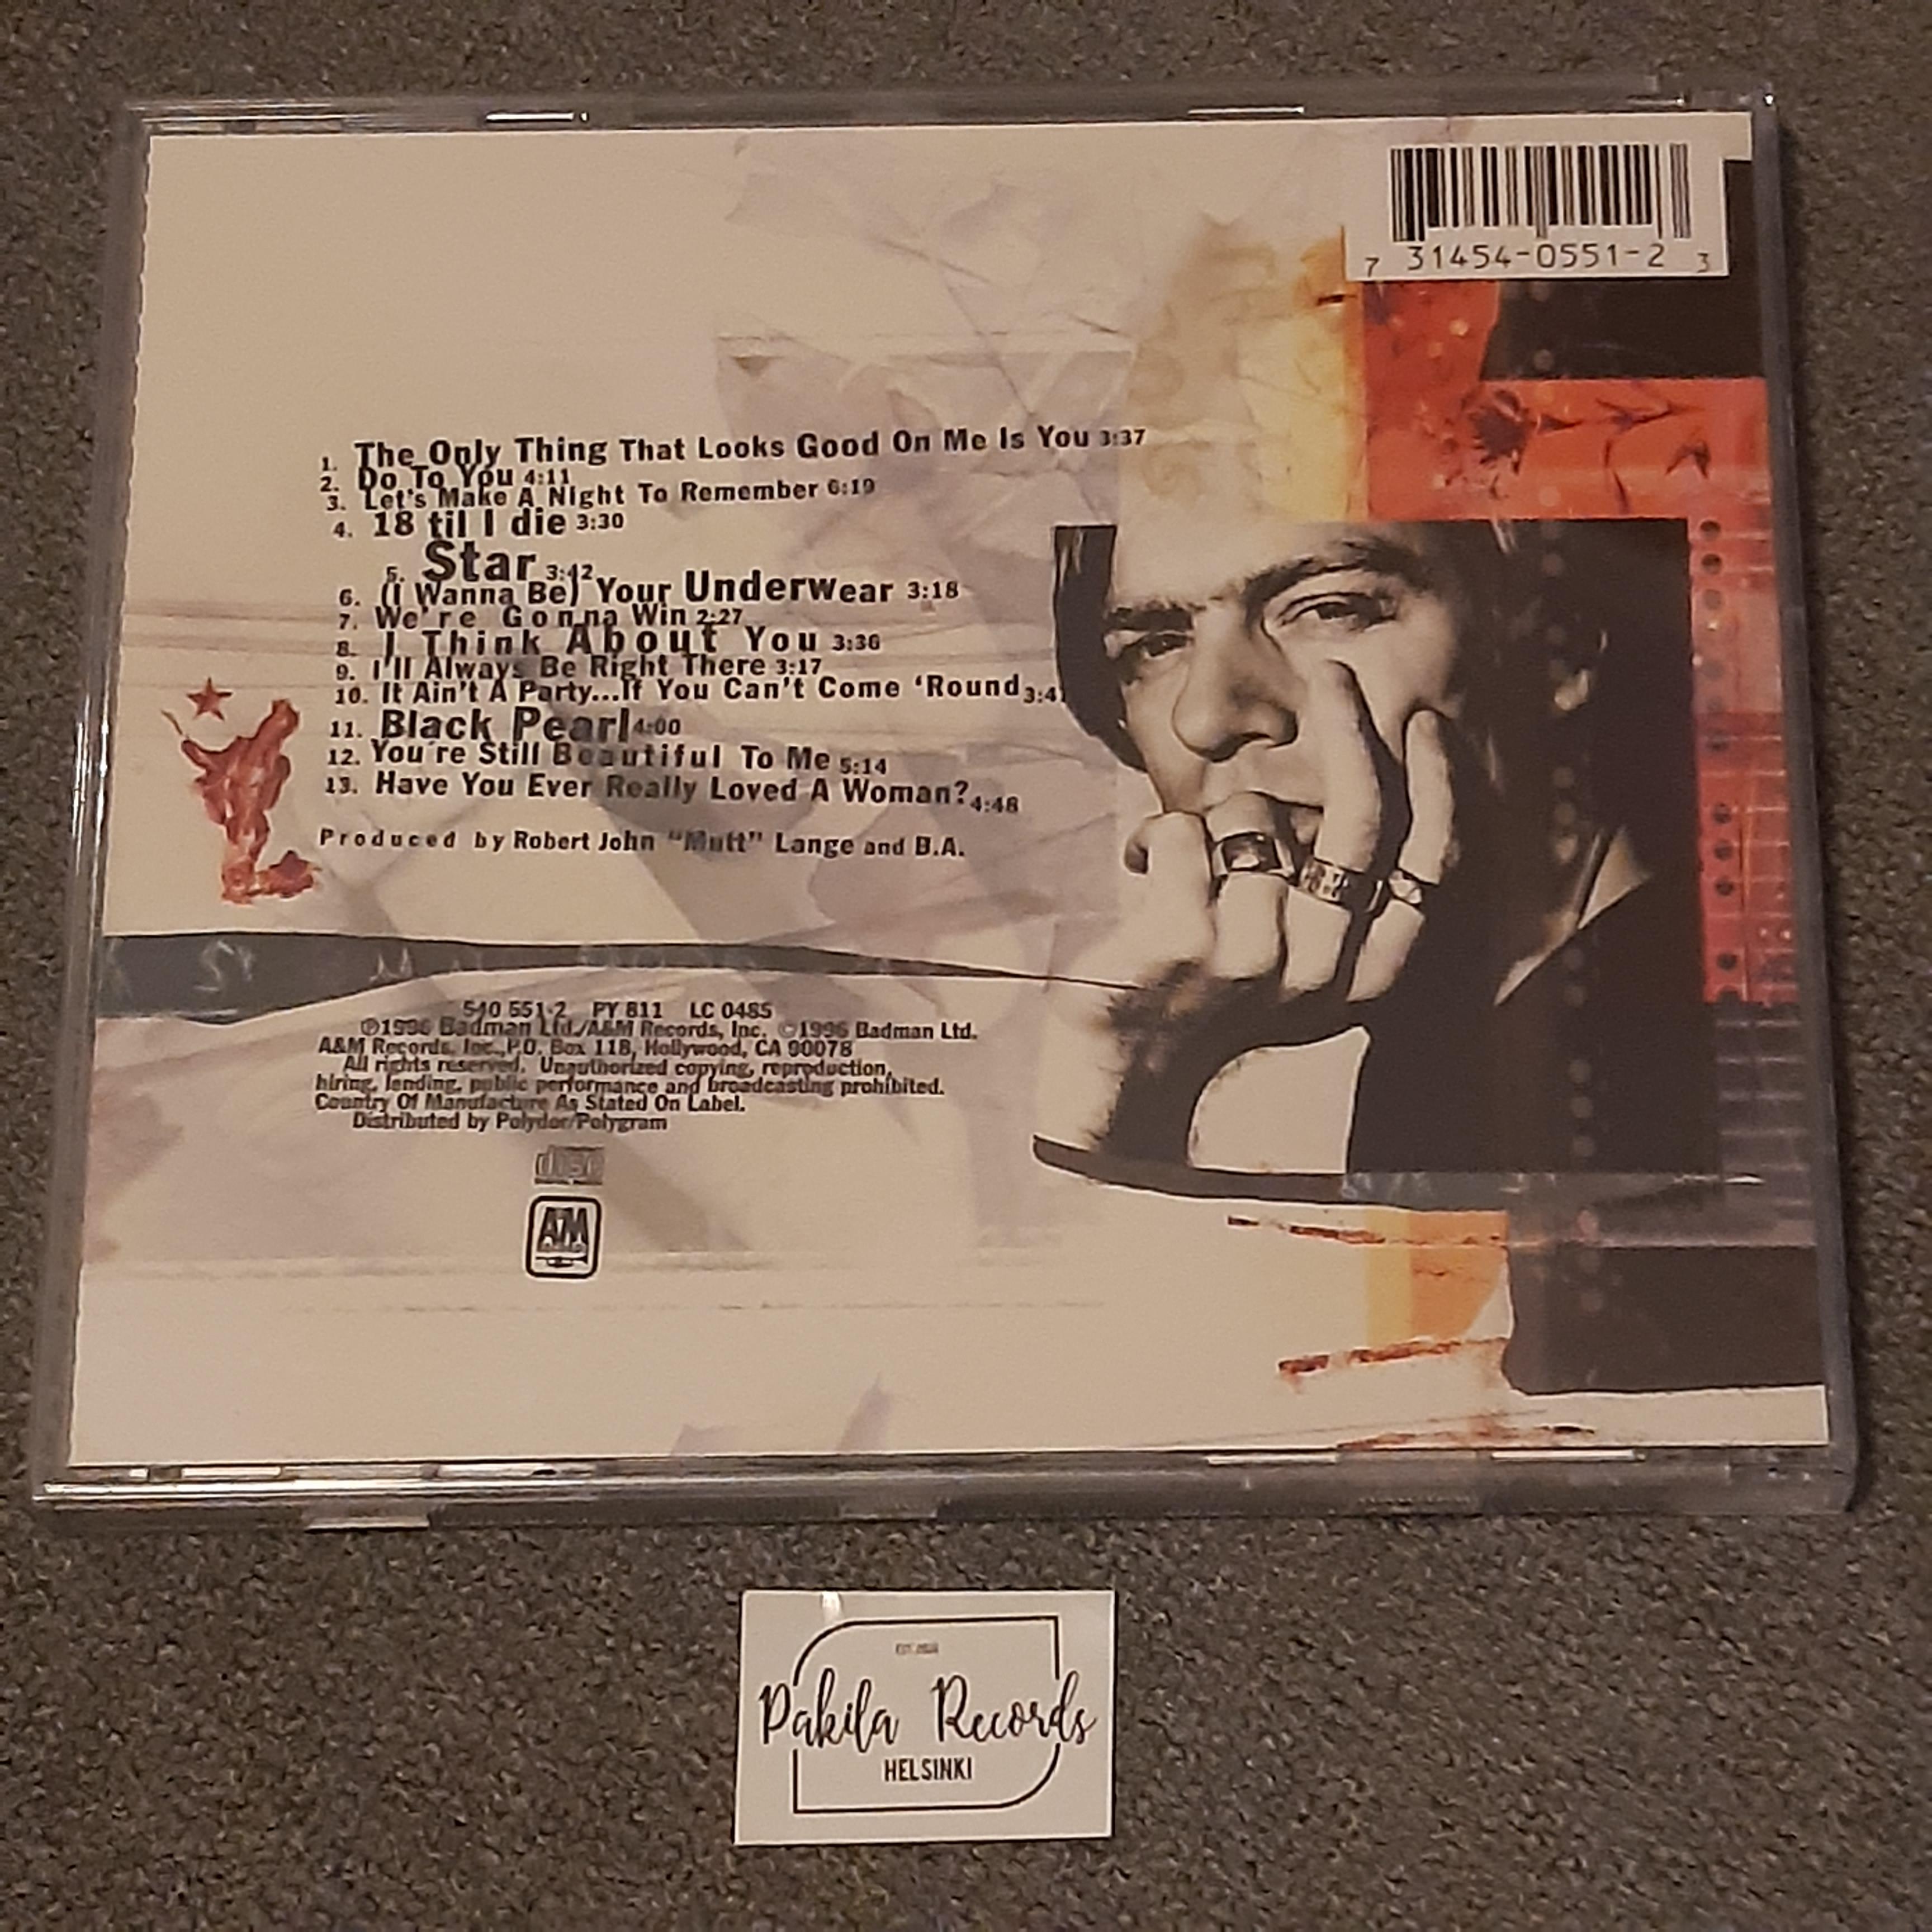 Bryan Adams - 18 Til I Die - CD (käytetty)